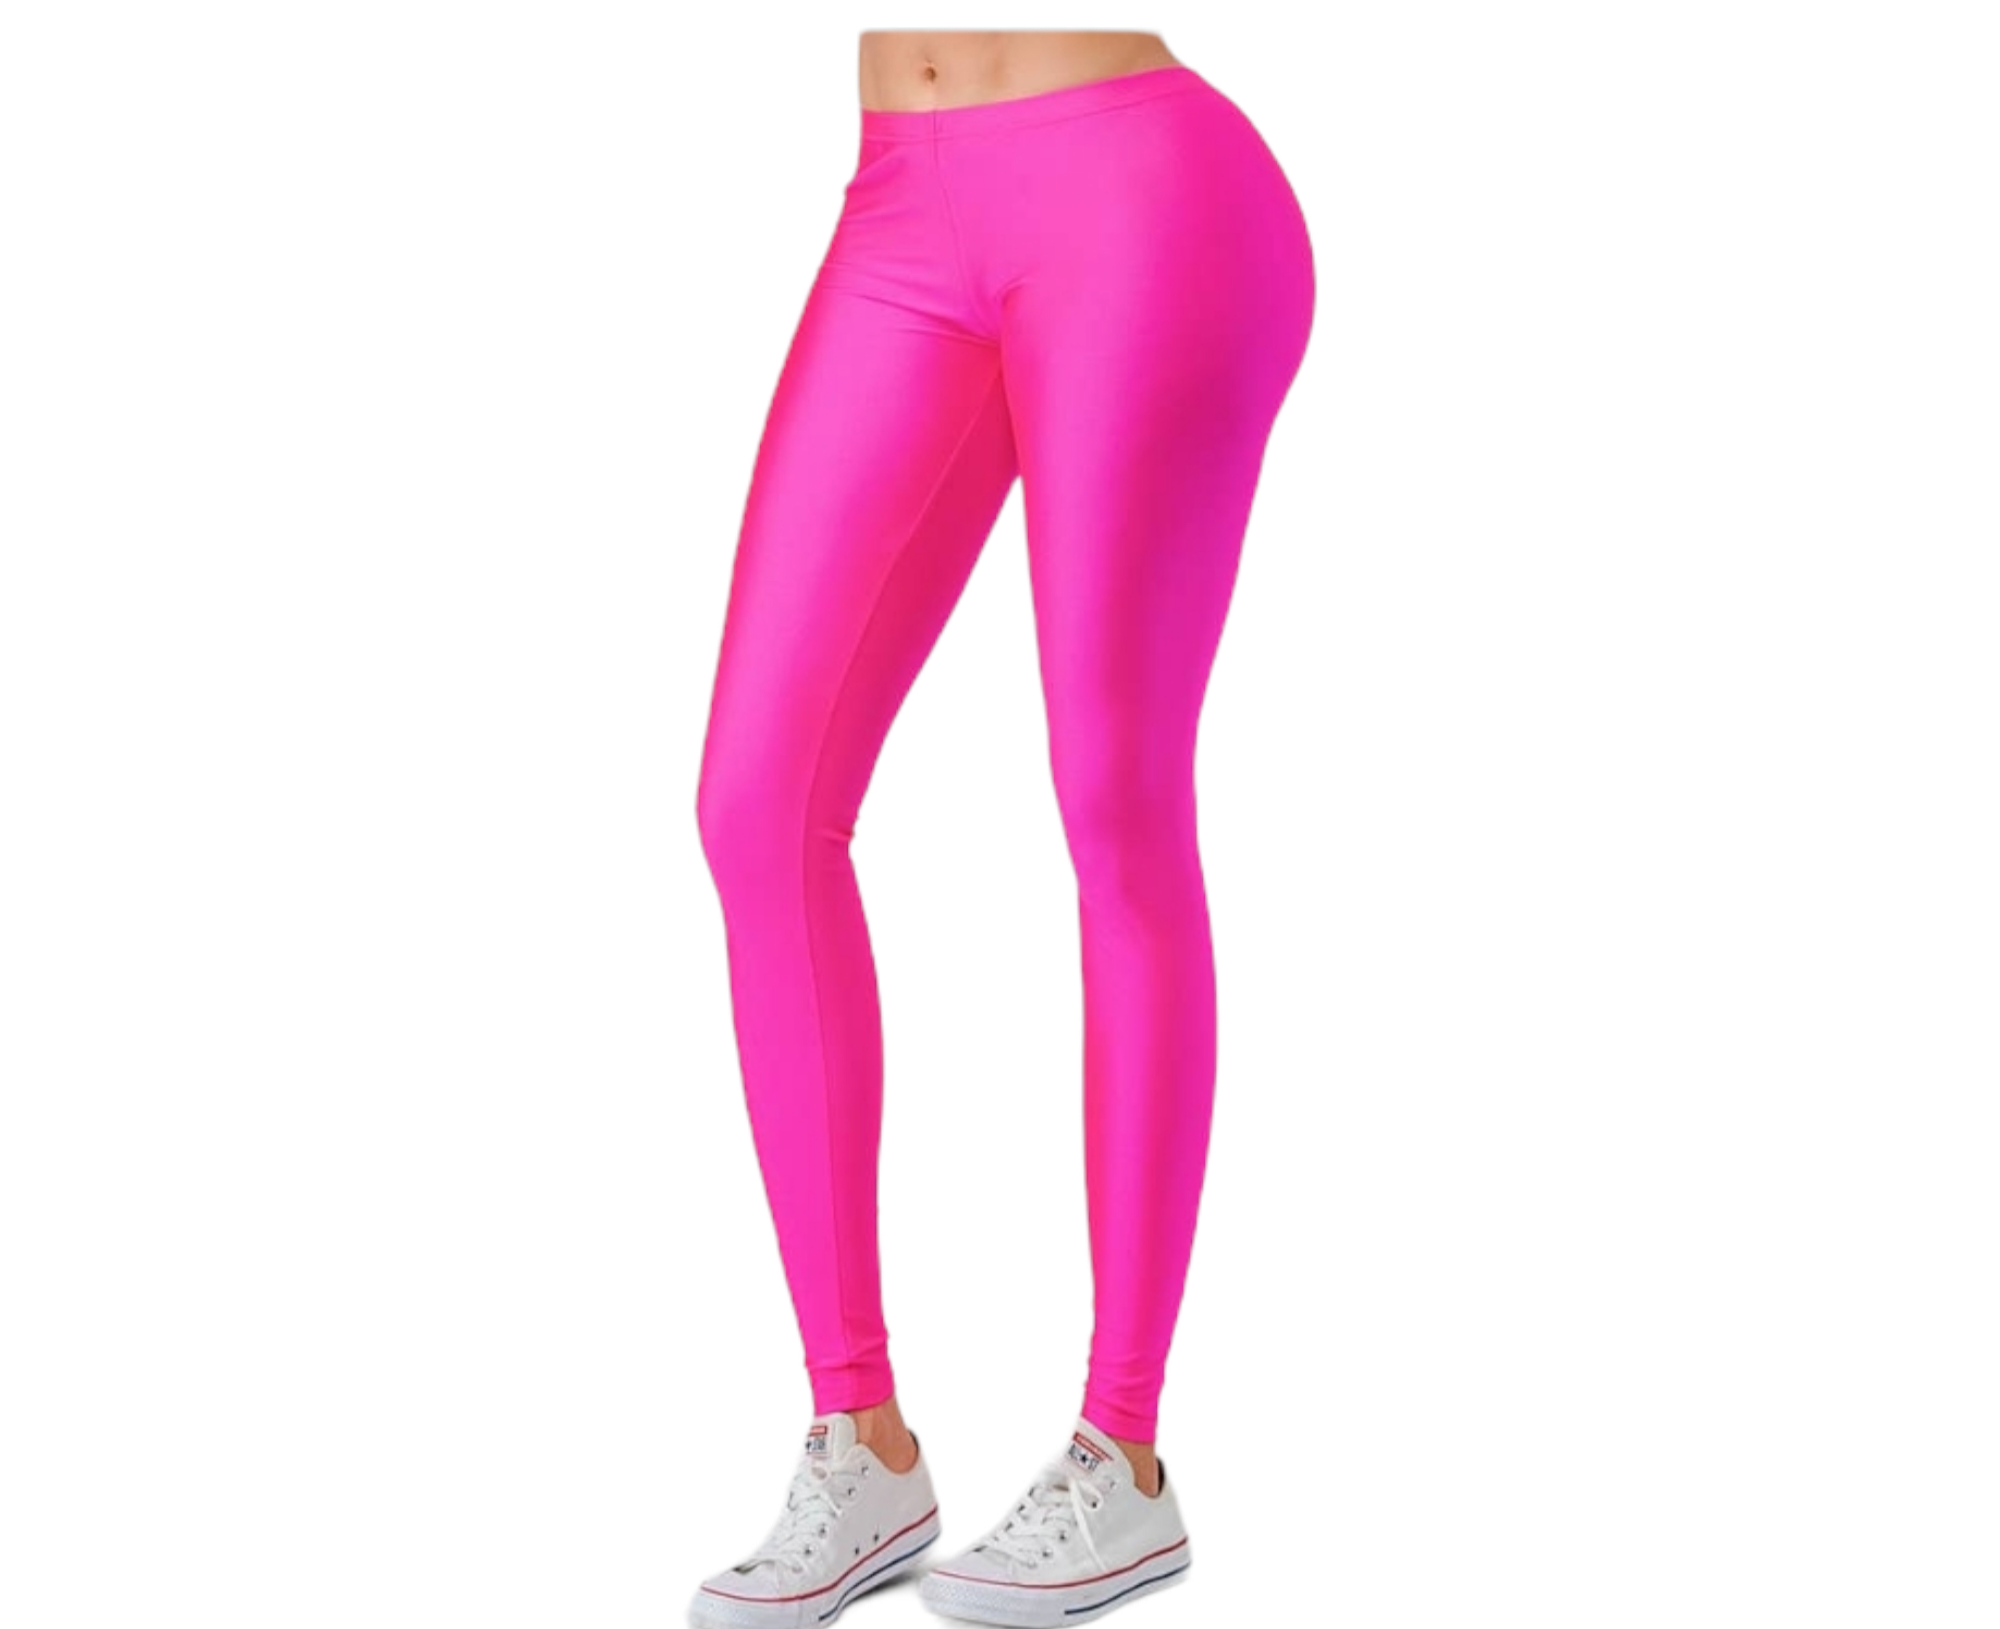  Neon Pink Leggings